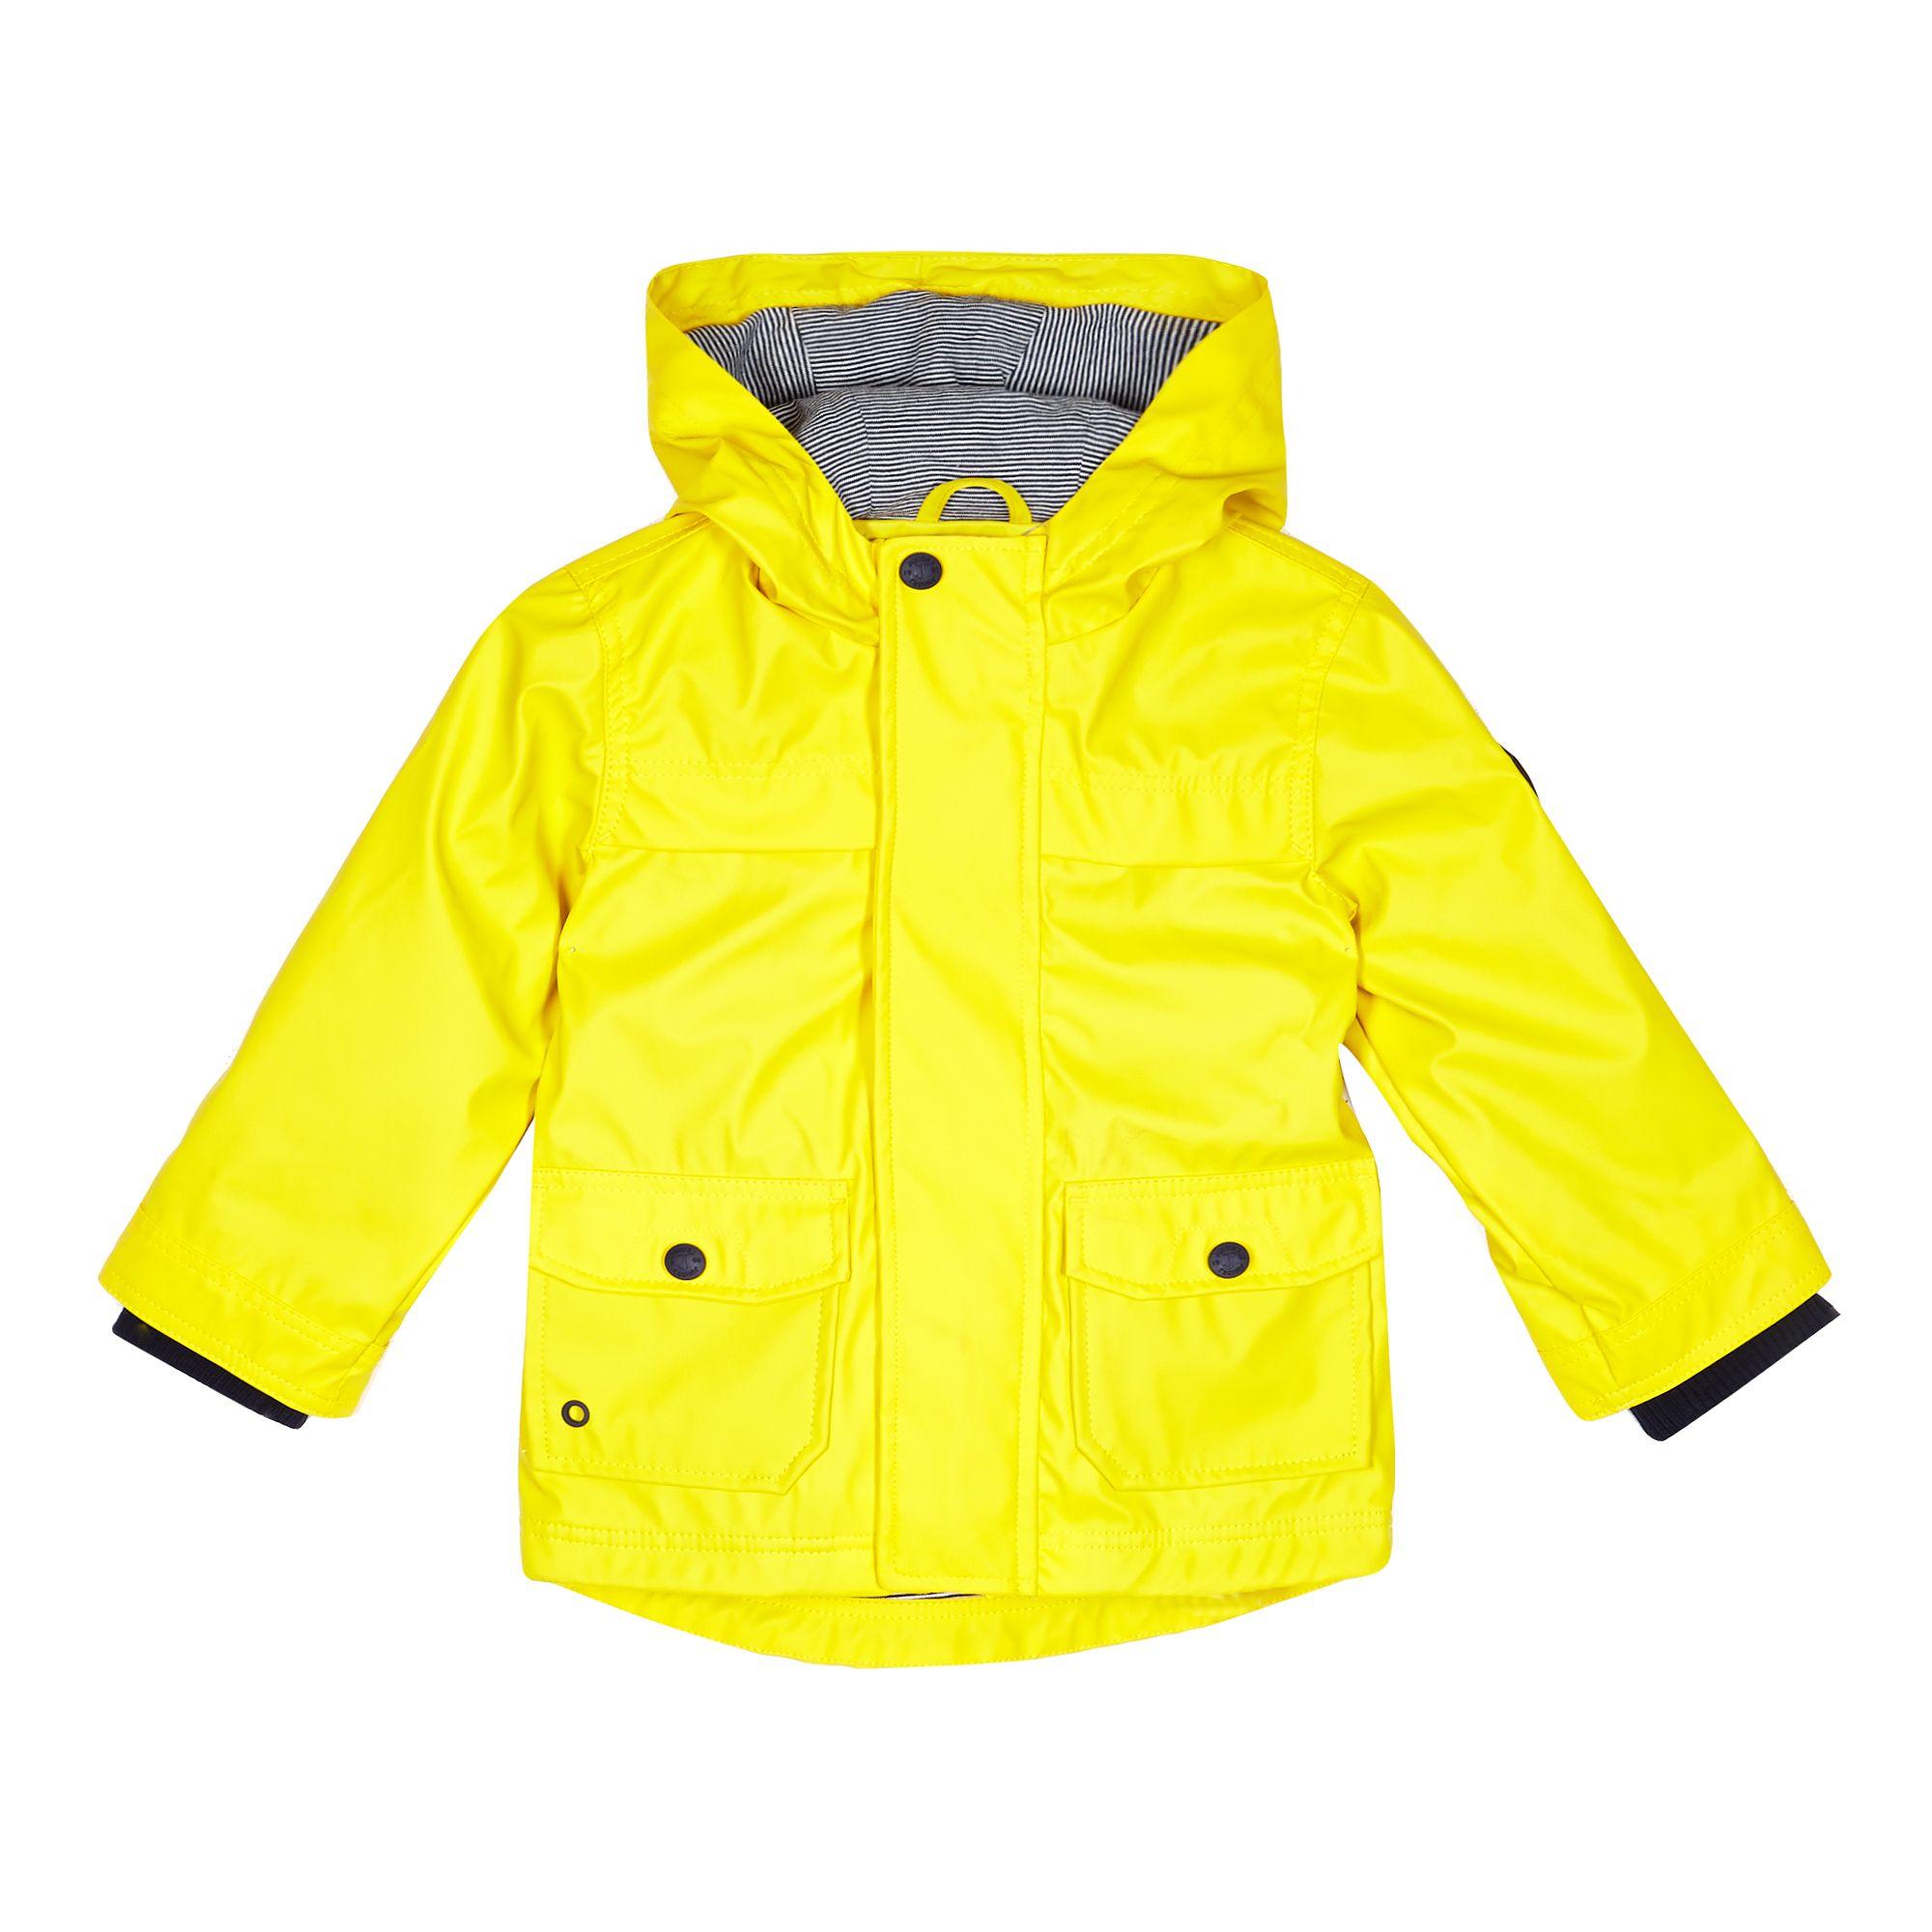 J By Jasper Conran Kids Boys' Yellow Raincoat From Debenhams | eBay